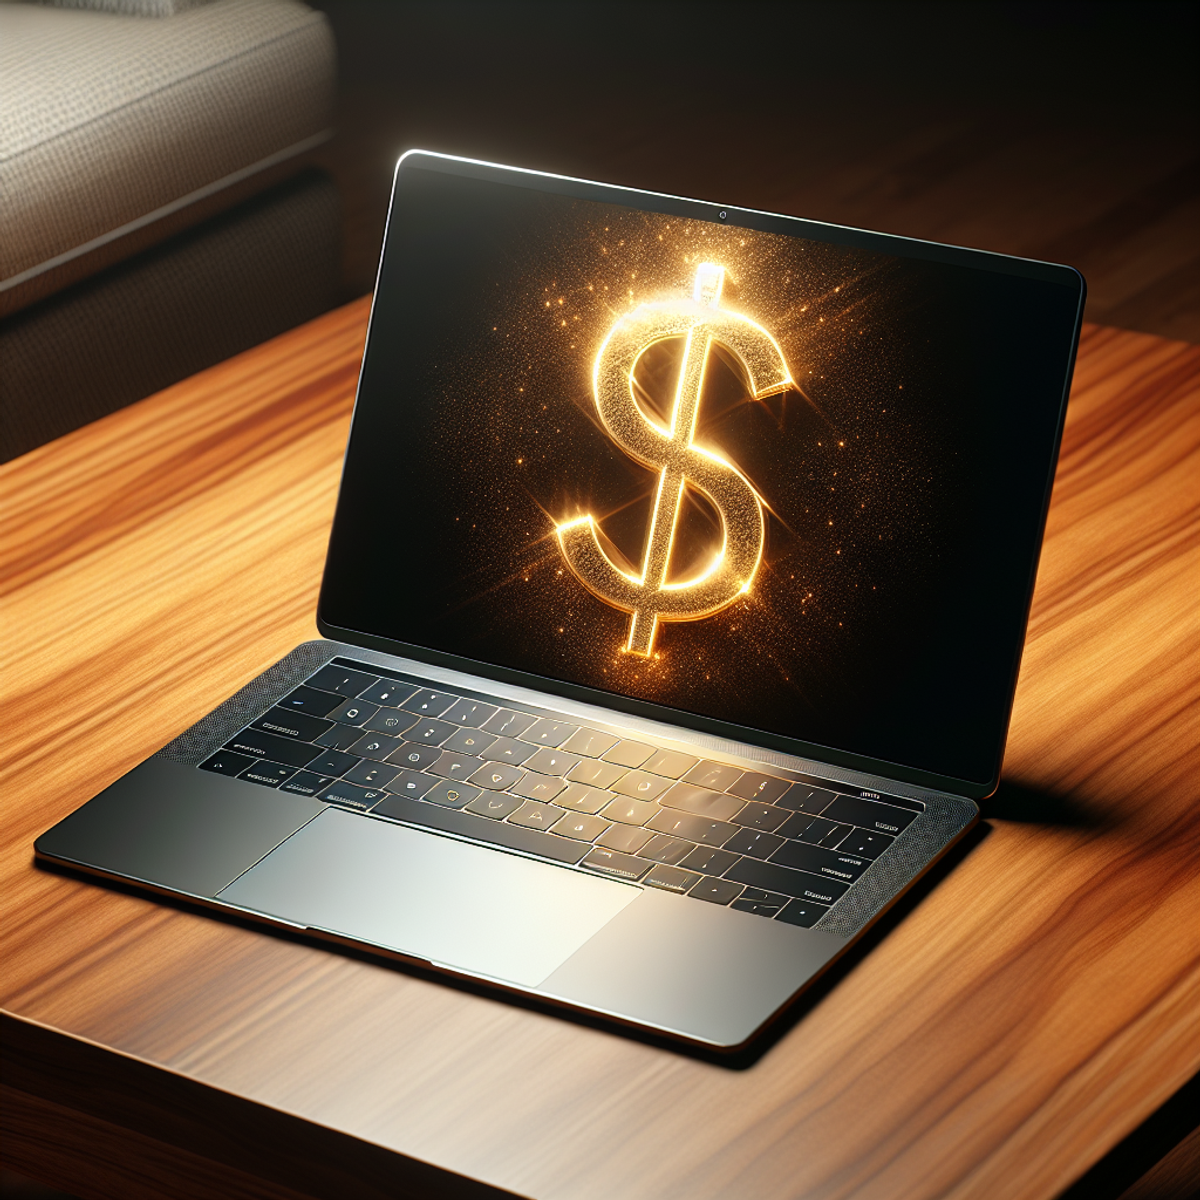 Sleek modern laptop on wooden table displaying golden dollar sign symbol alt text